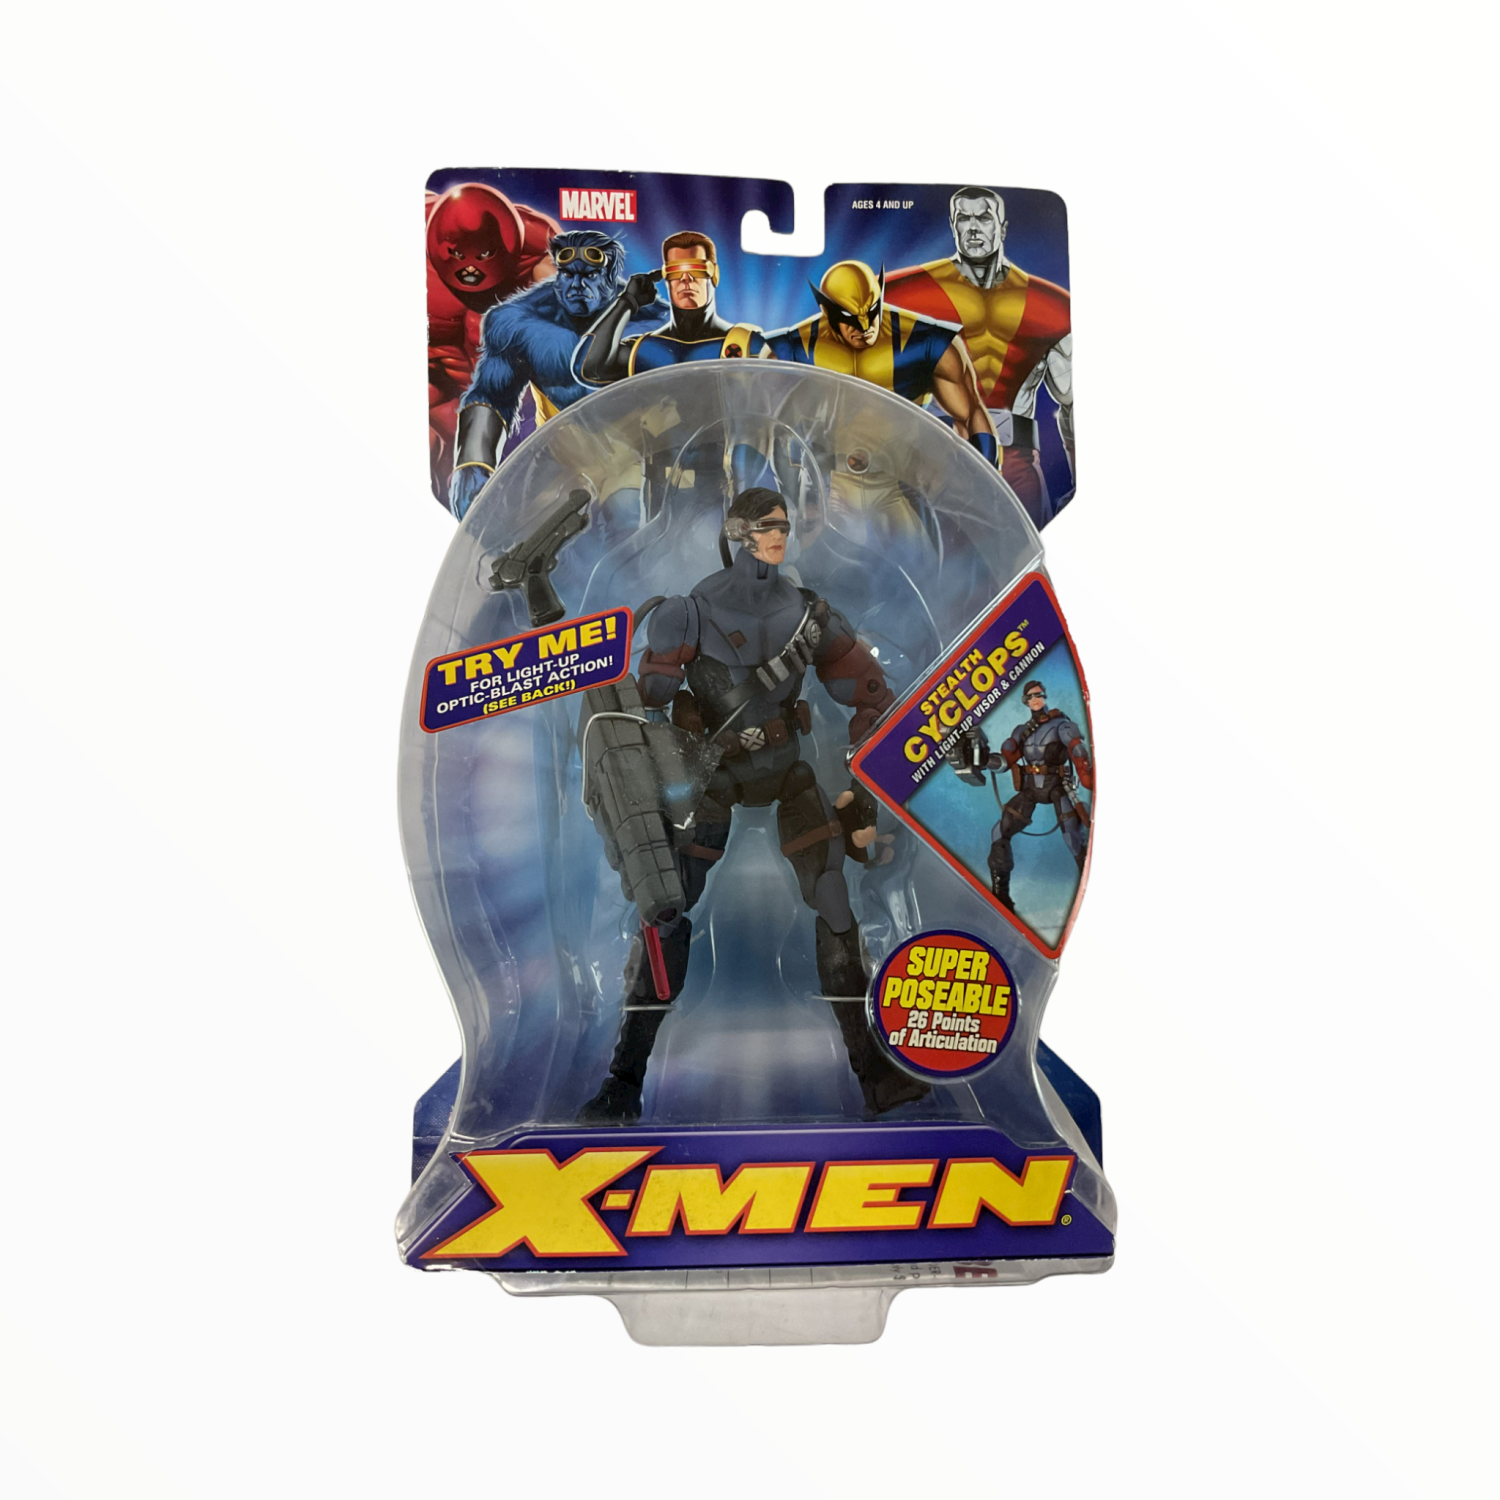 X-Men Action Figure Asst. 2:Stealth Cyclops w/ Light-Up Visor & Cannon